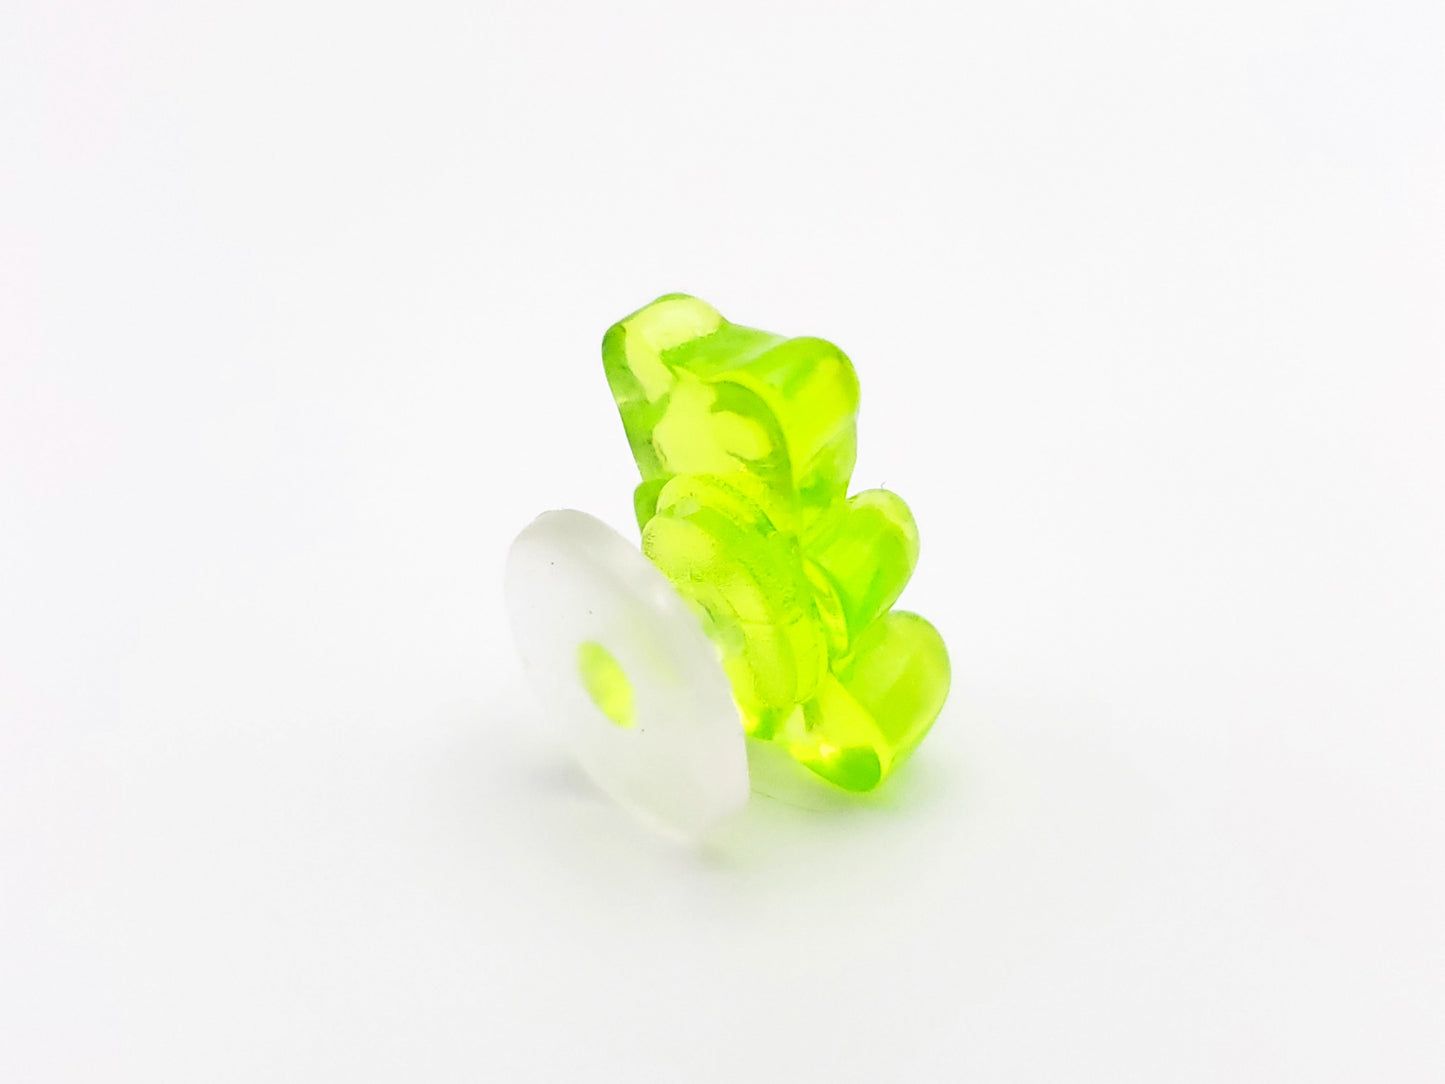 Green Gummy Bear Shoe Charm